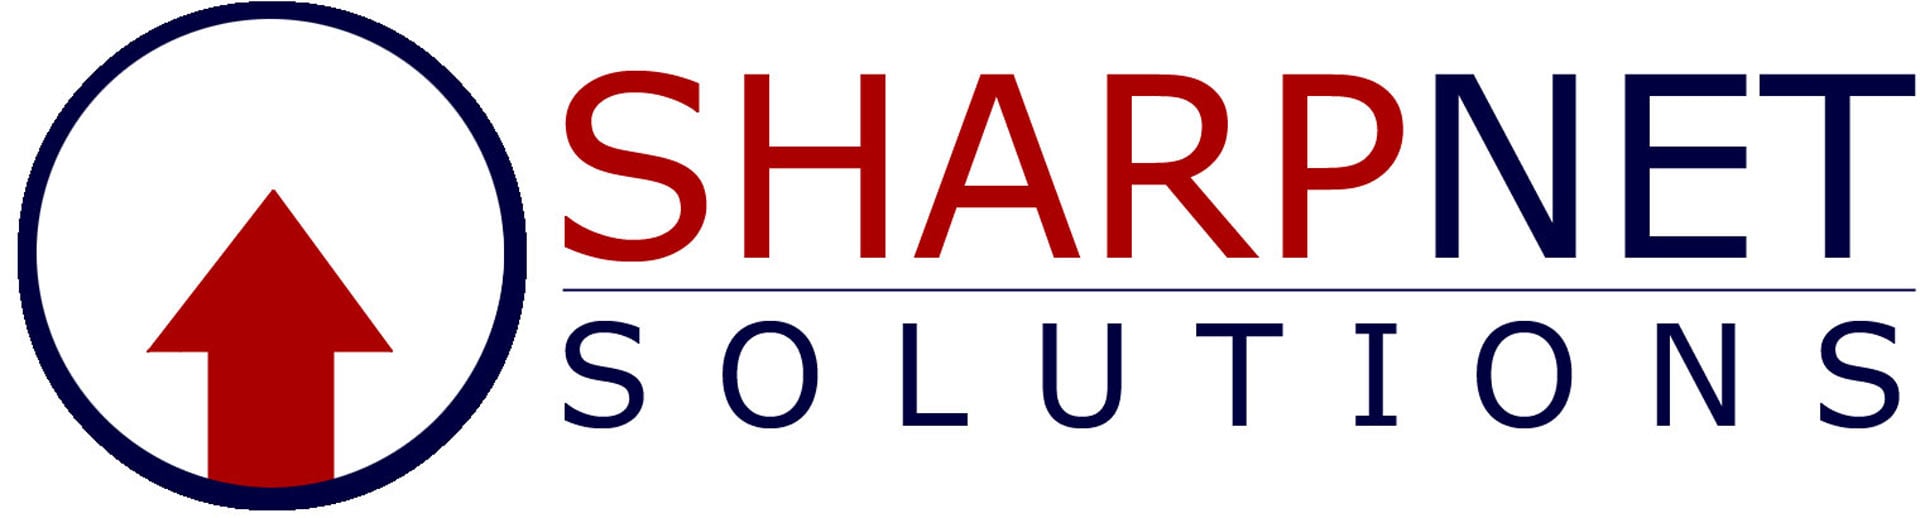 Top Local SEO Company Logo: SharpNet